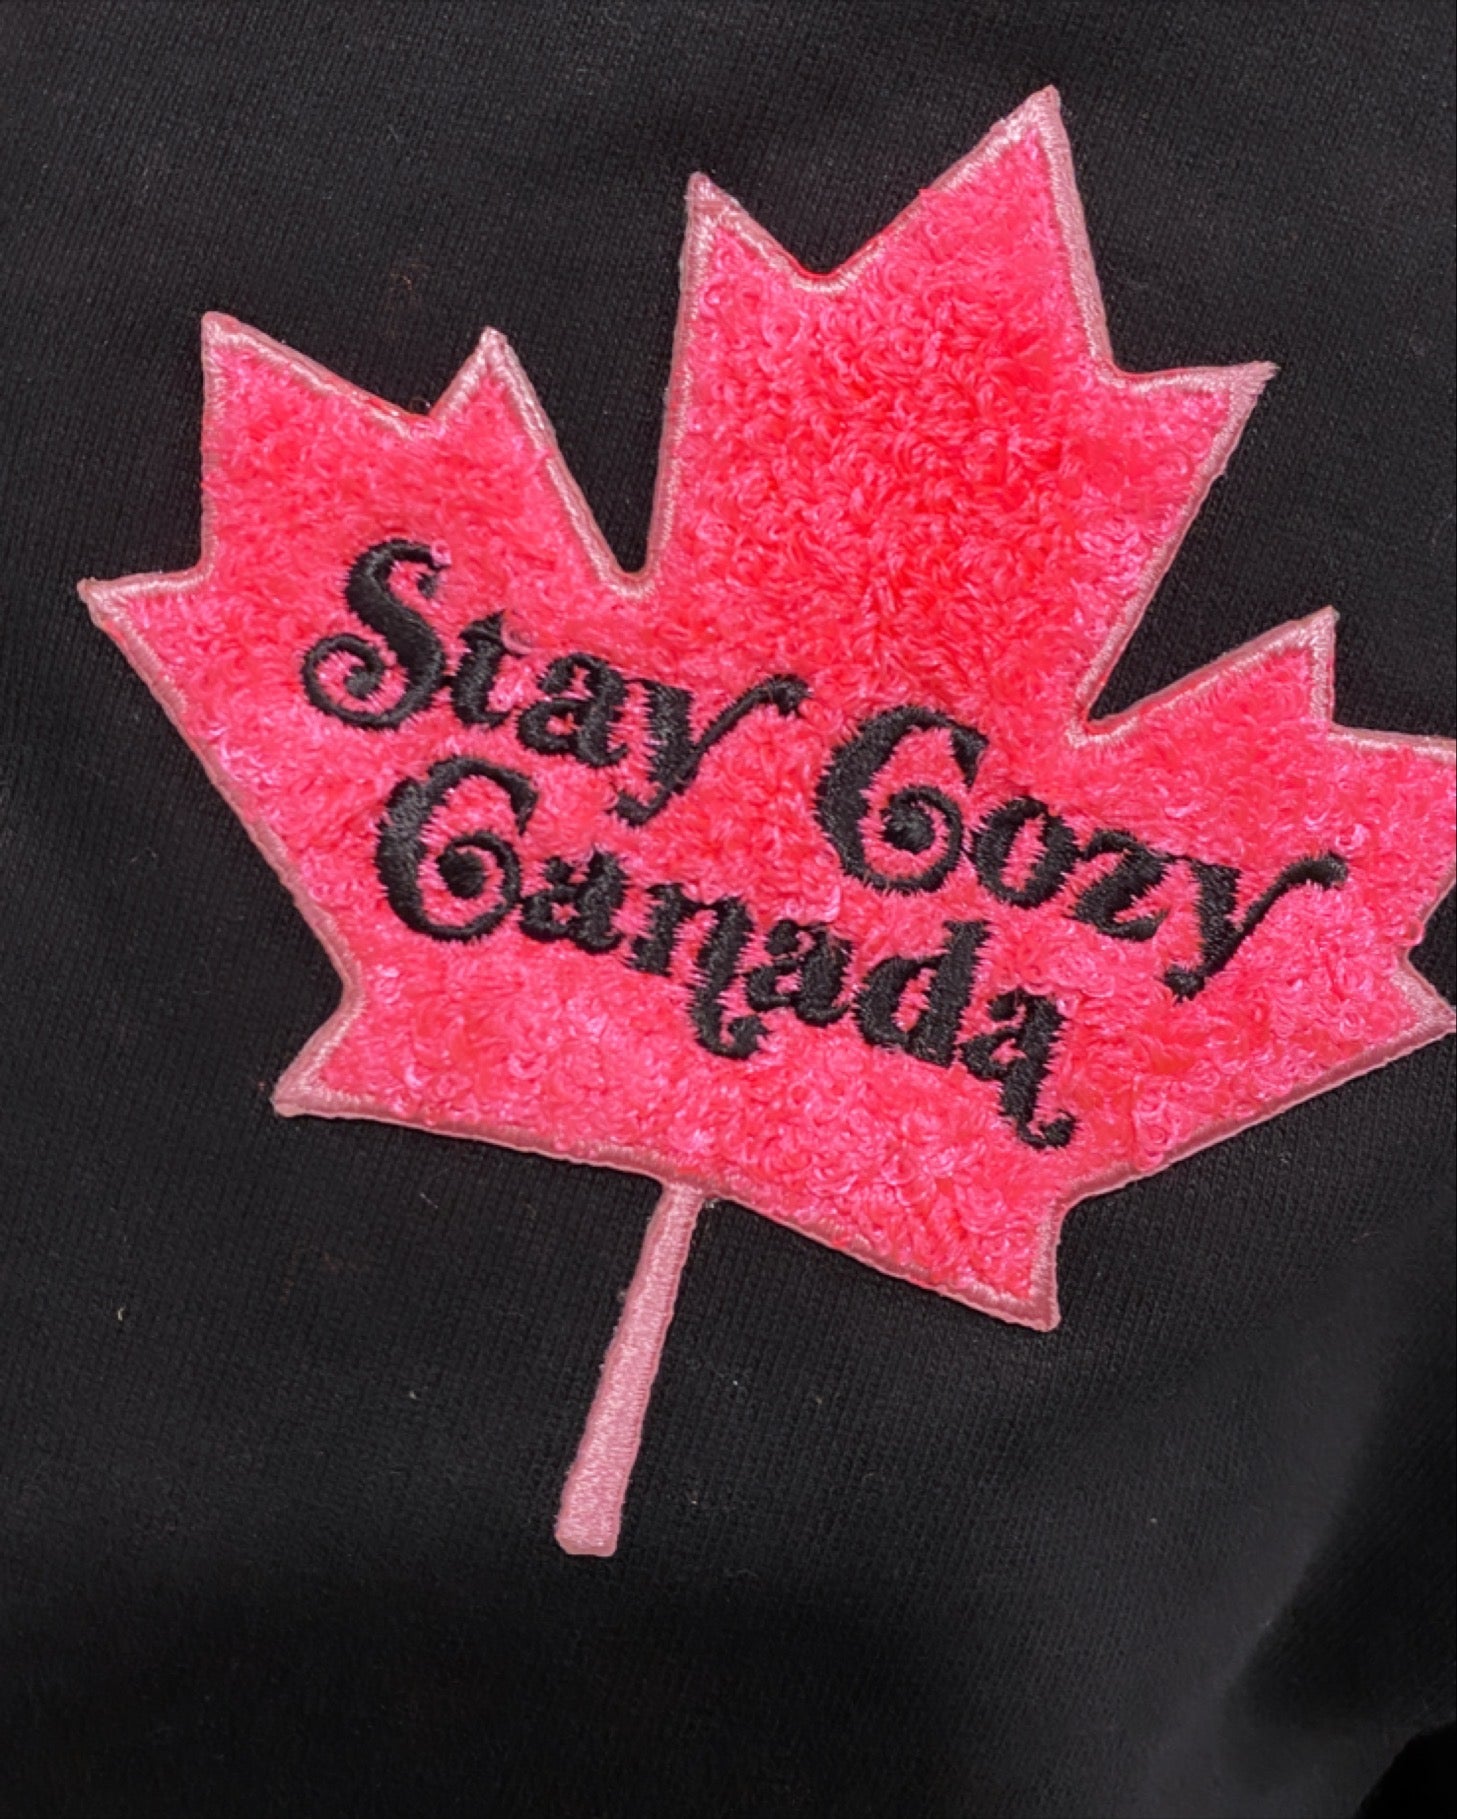 Stay Cozy Canada-Crew with Neon Patch - Birch Hill Studio